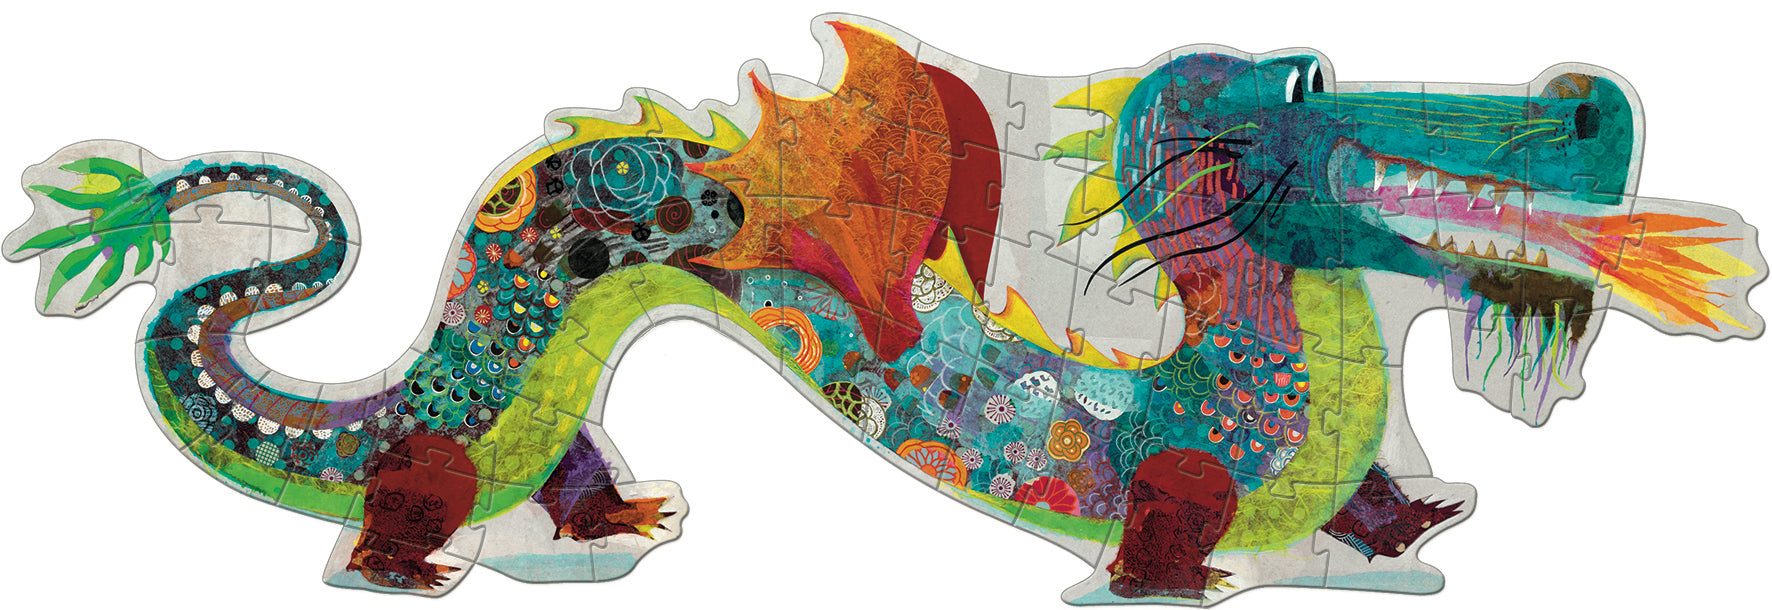 58 Piece Leon the Dragon Floor Puzzle - JKA Toys